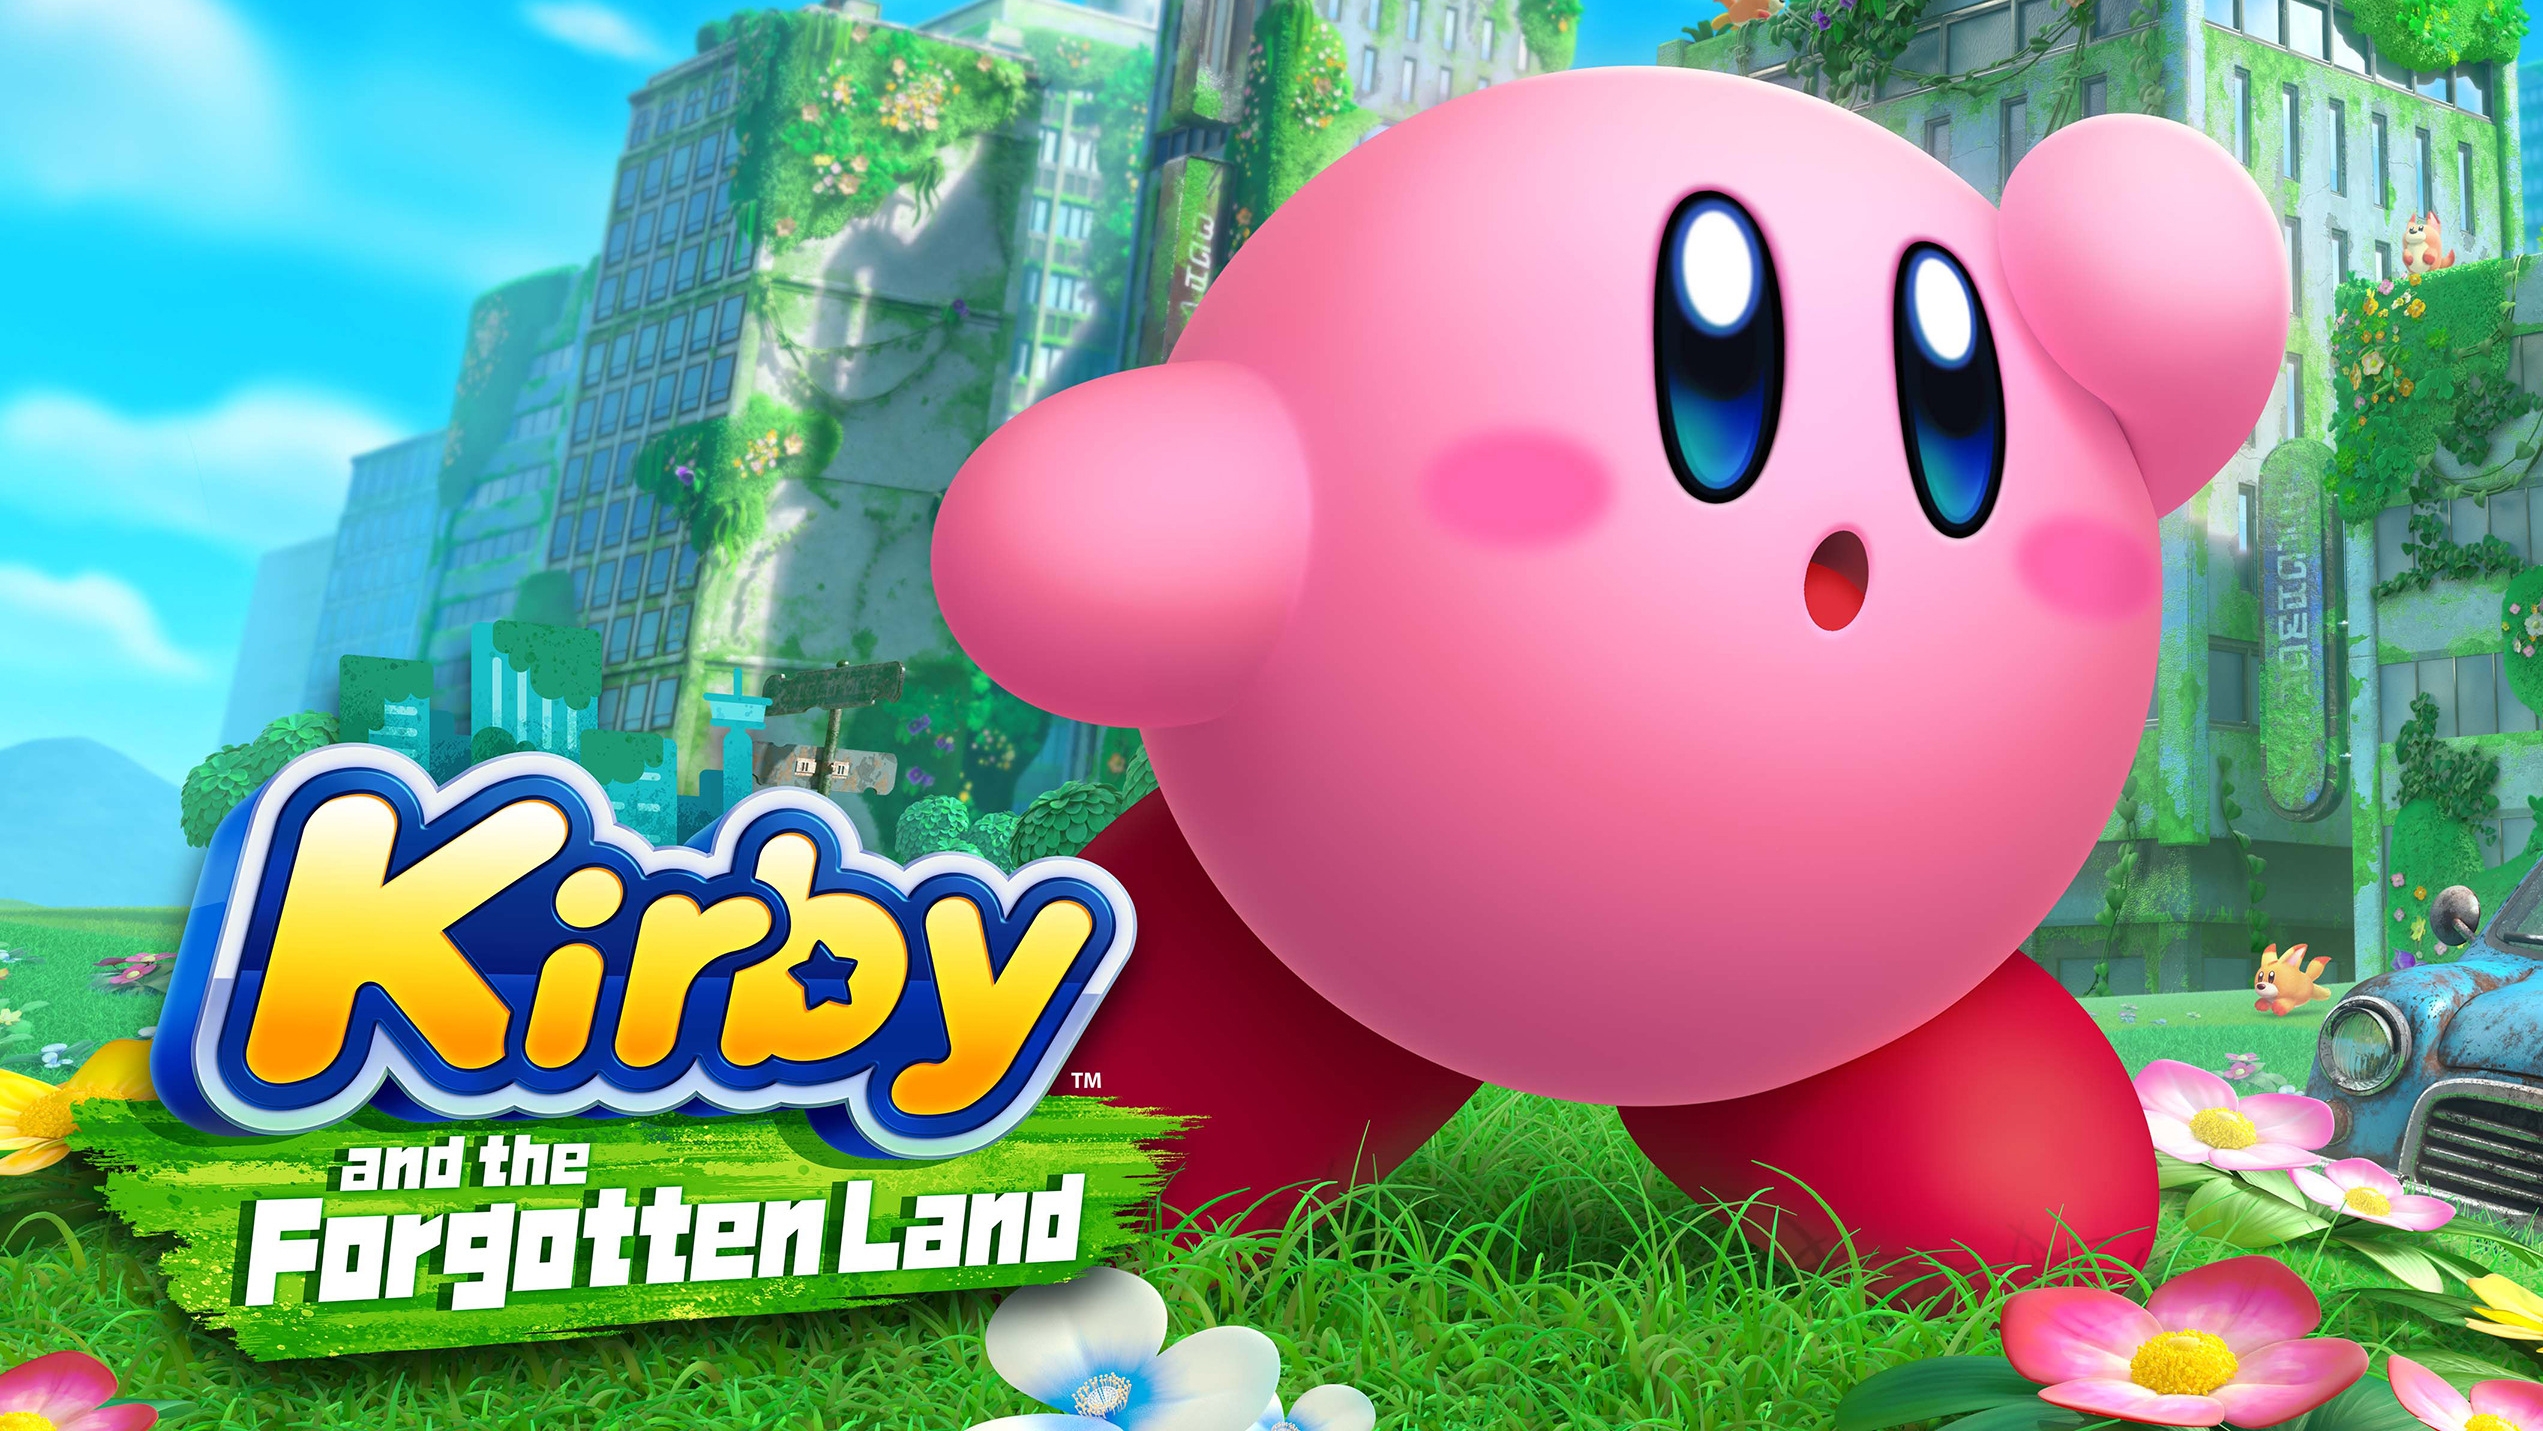 Kirby y la Tierra Olvidada. Nintendo Switch